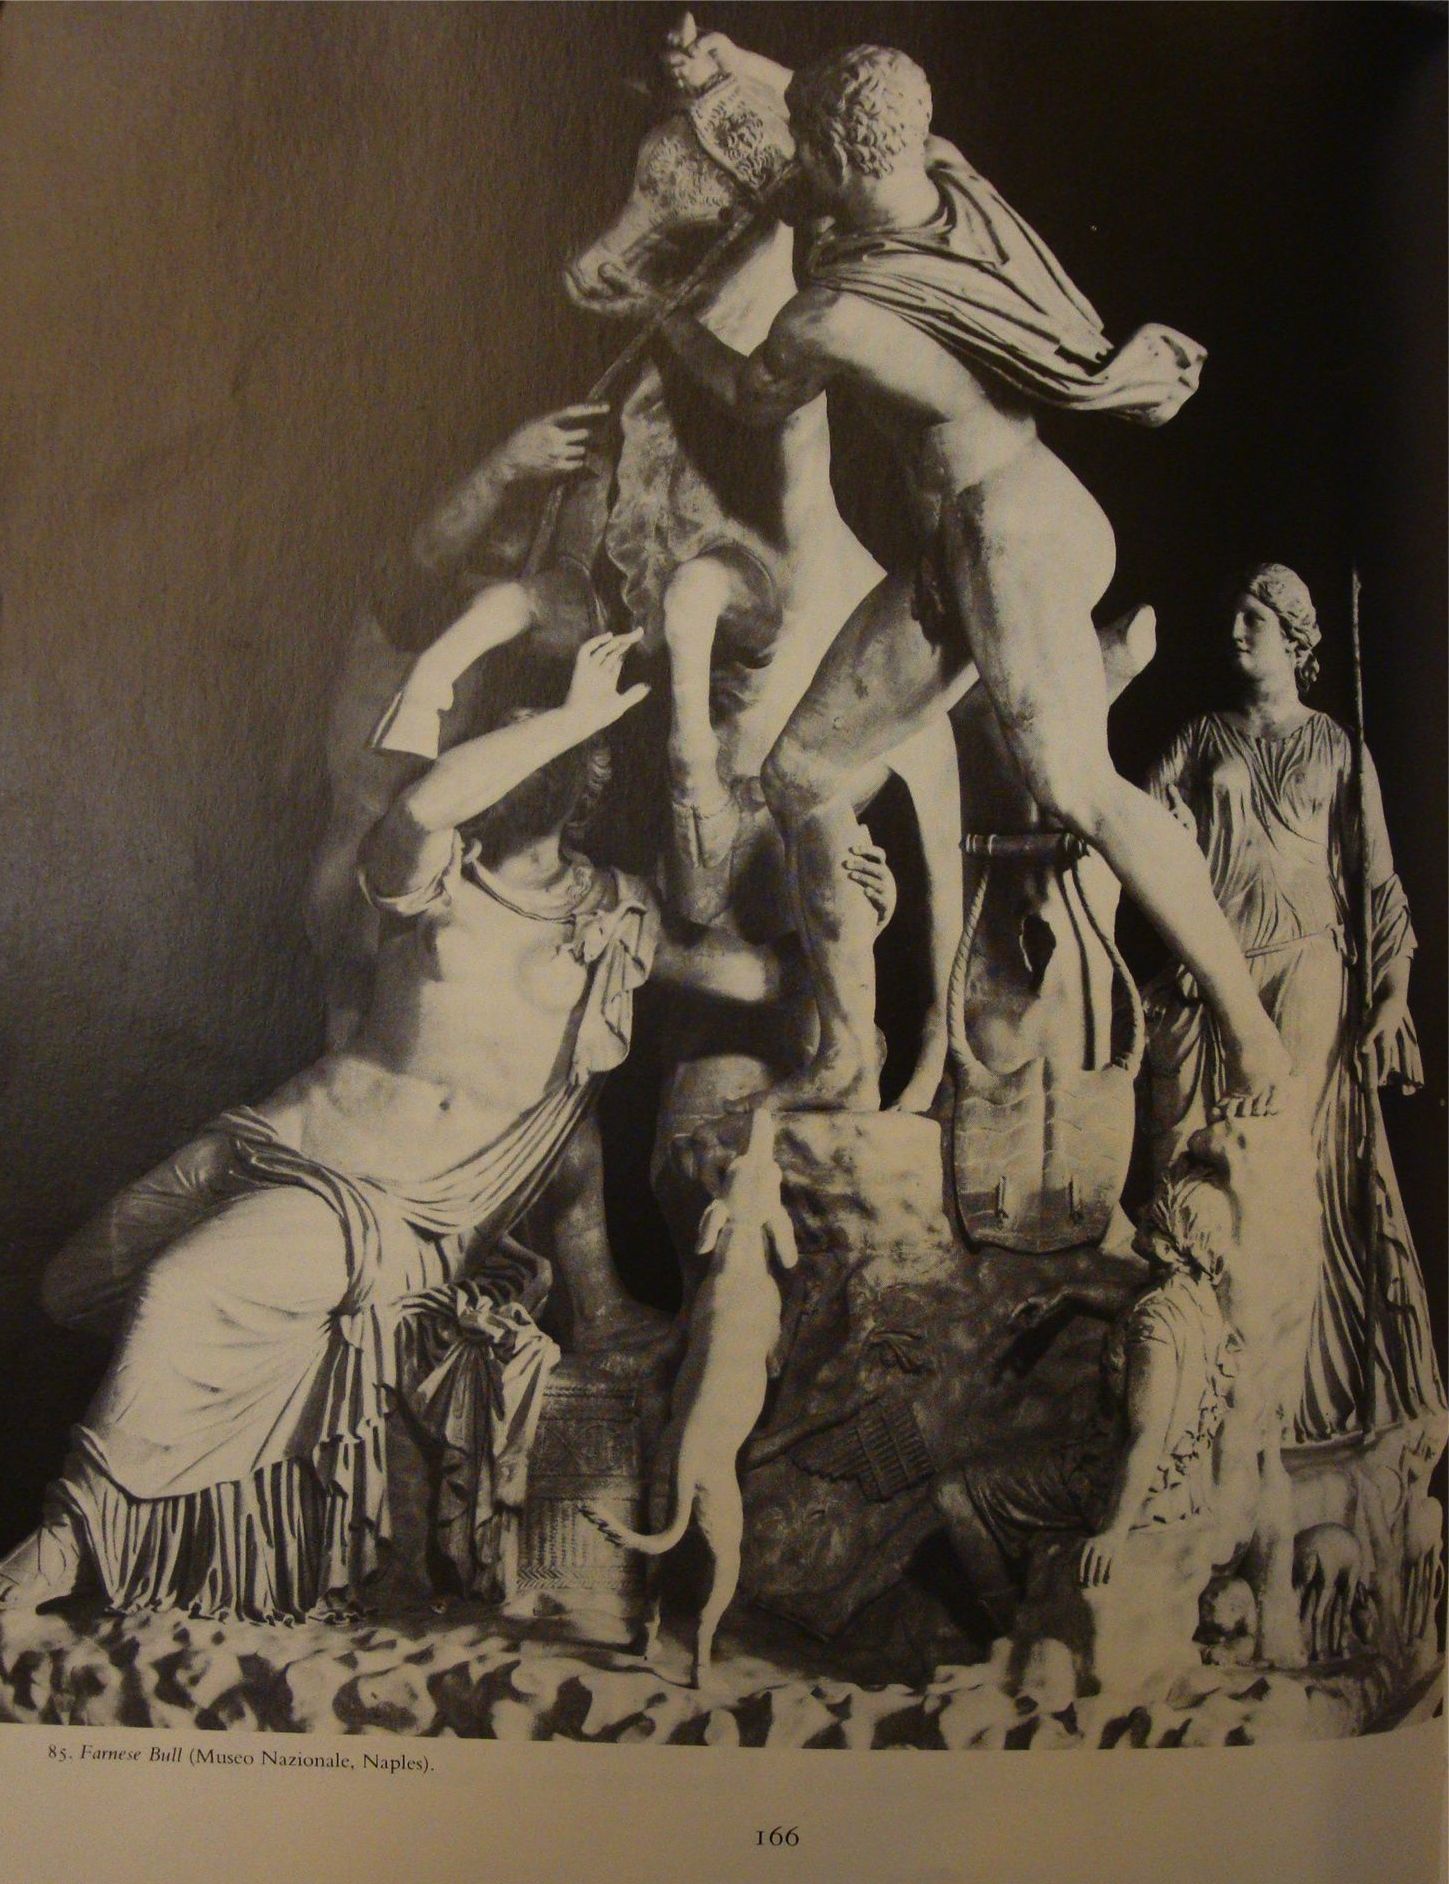 The Farnese Bull